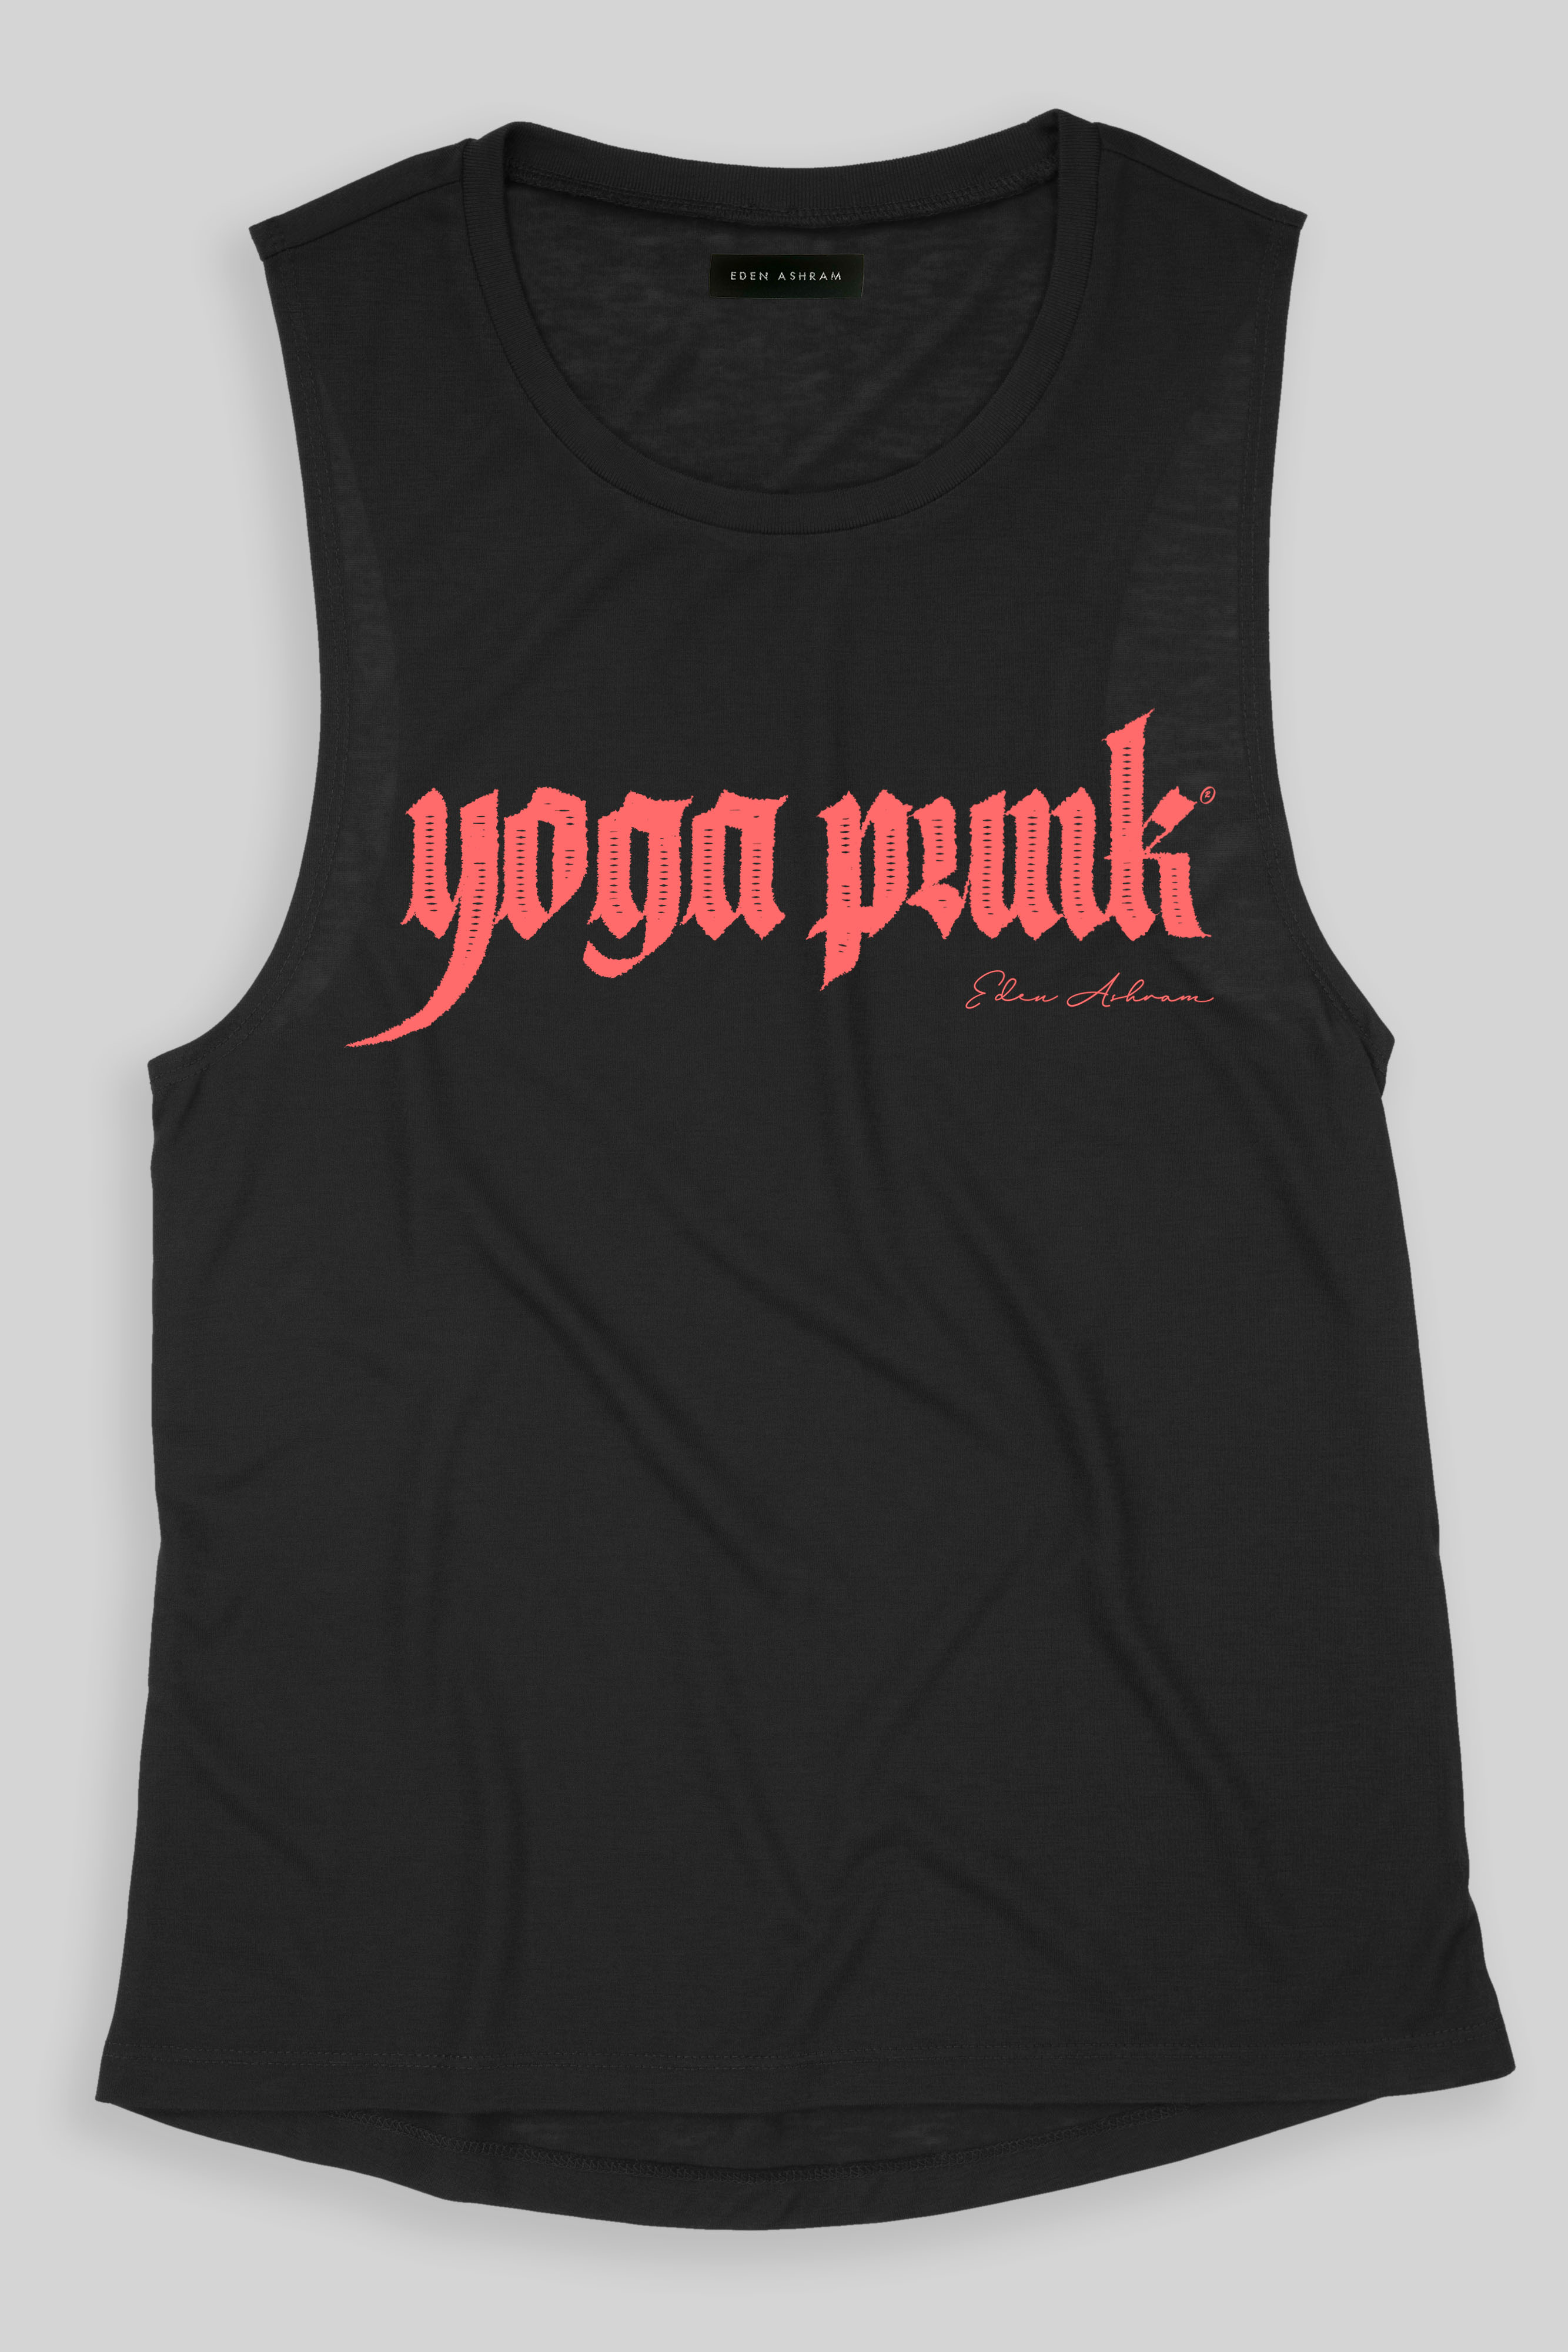 EDEN ASHRAM Yoga Punk Super Soft Muscle Tank Black